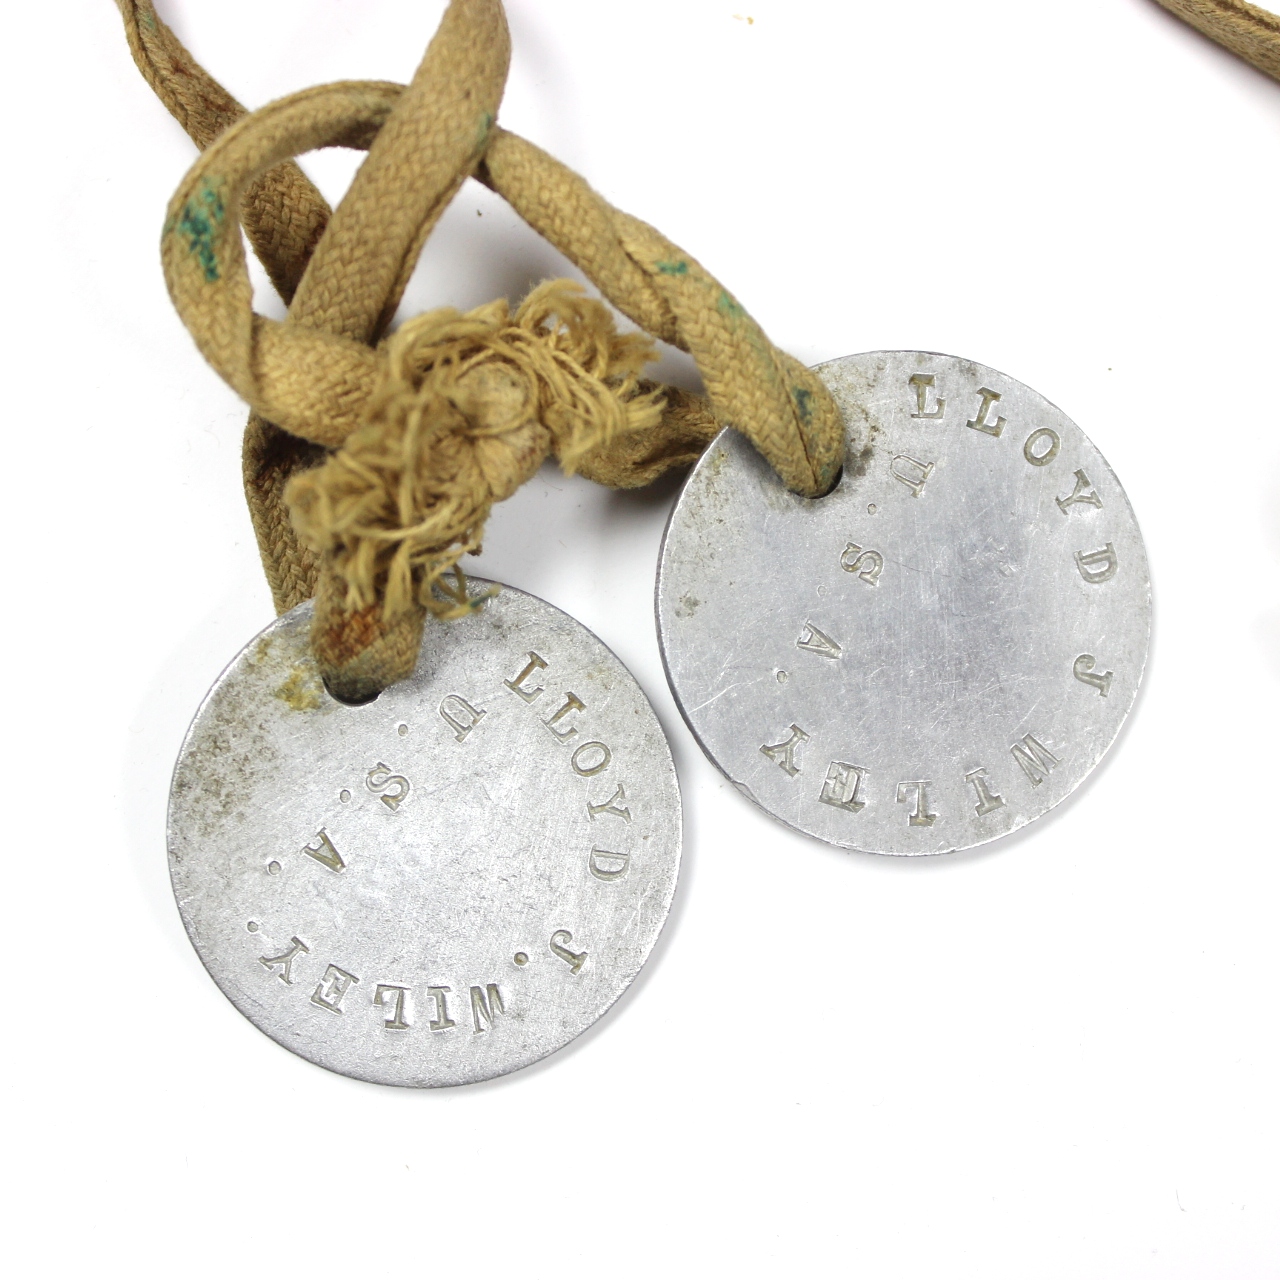 Pair of dog-tags w/ original cotton cord